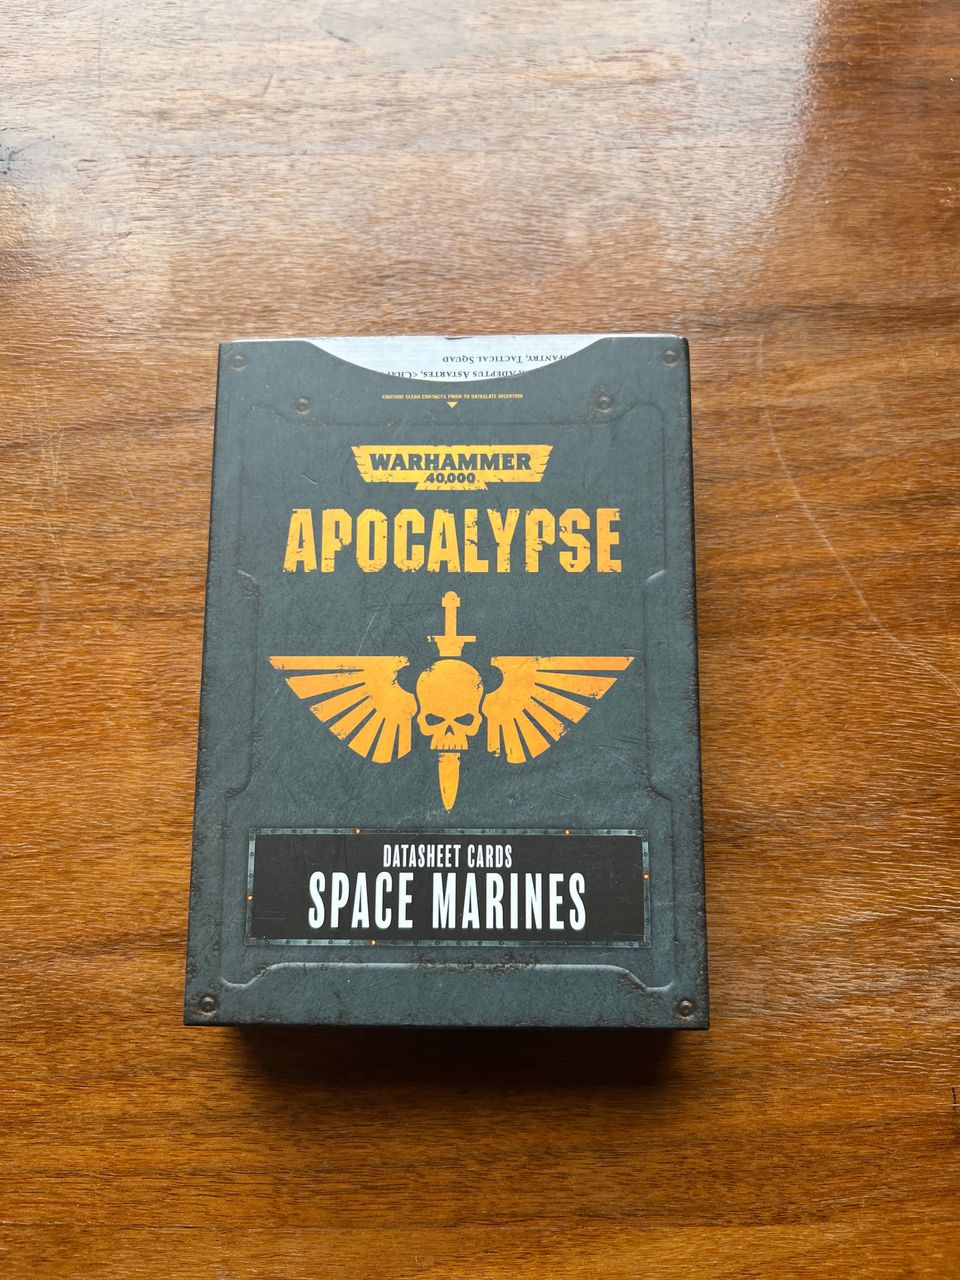 Warhammer 40k Apocalypse Space Marines Datasheed cards paketti